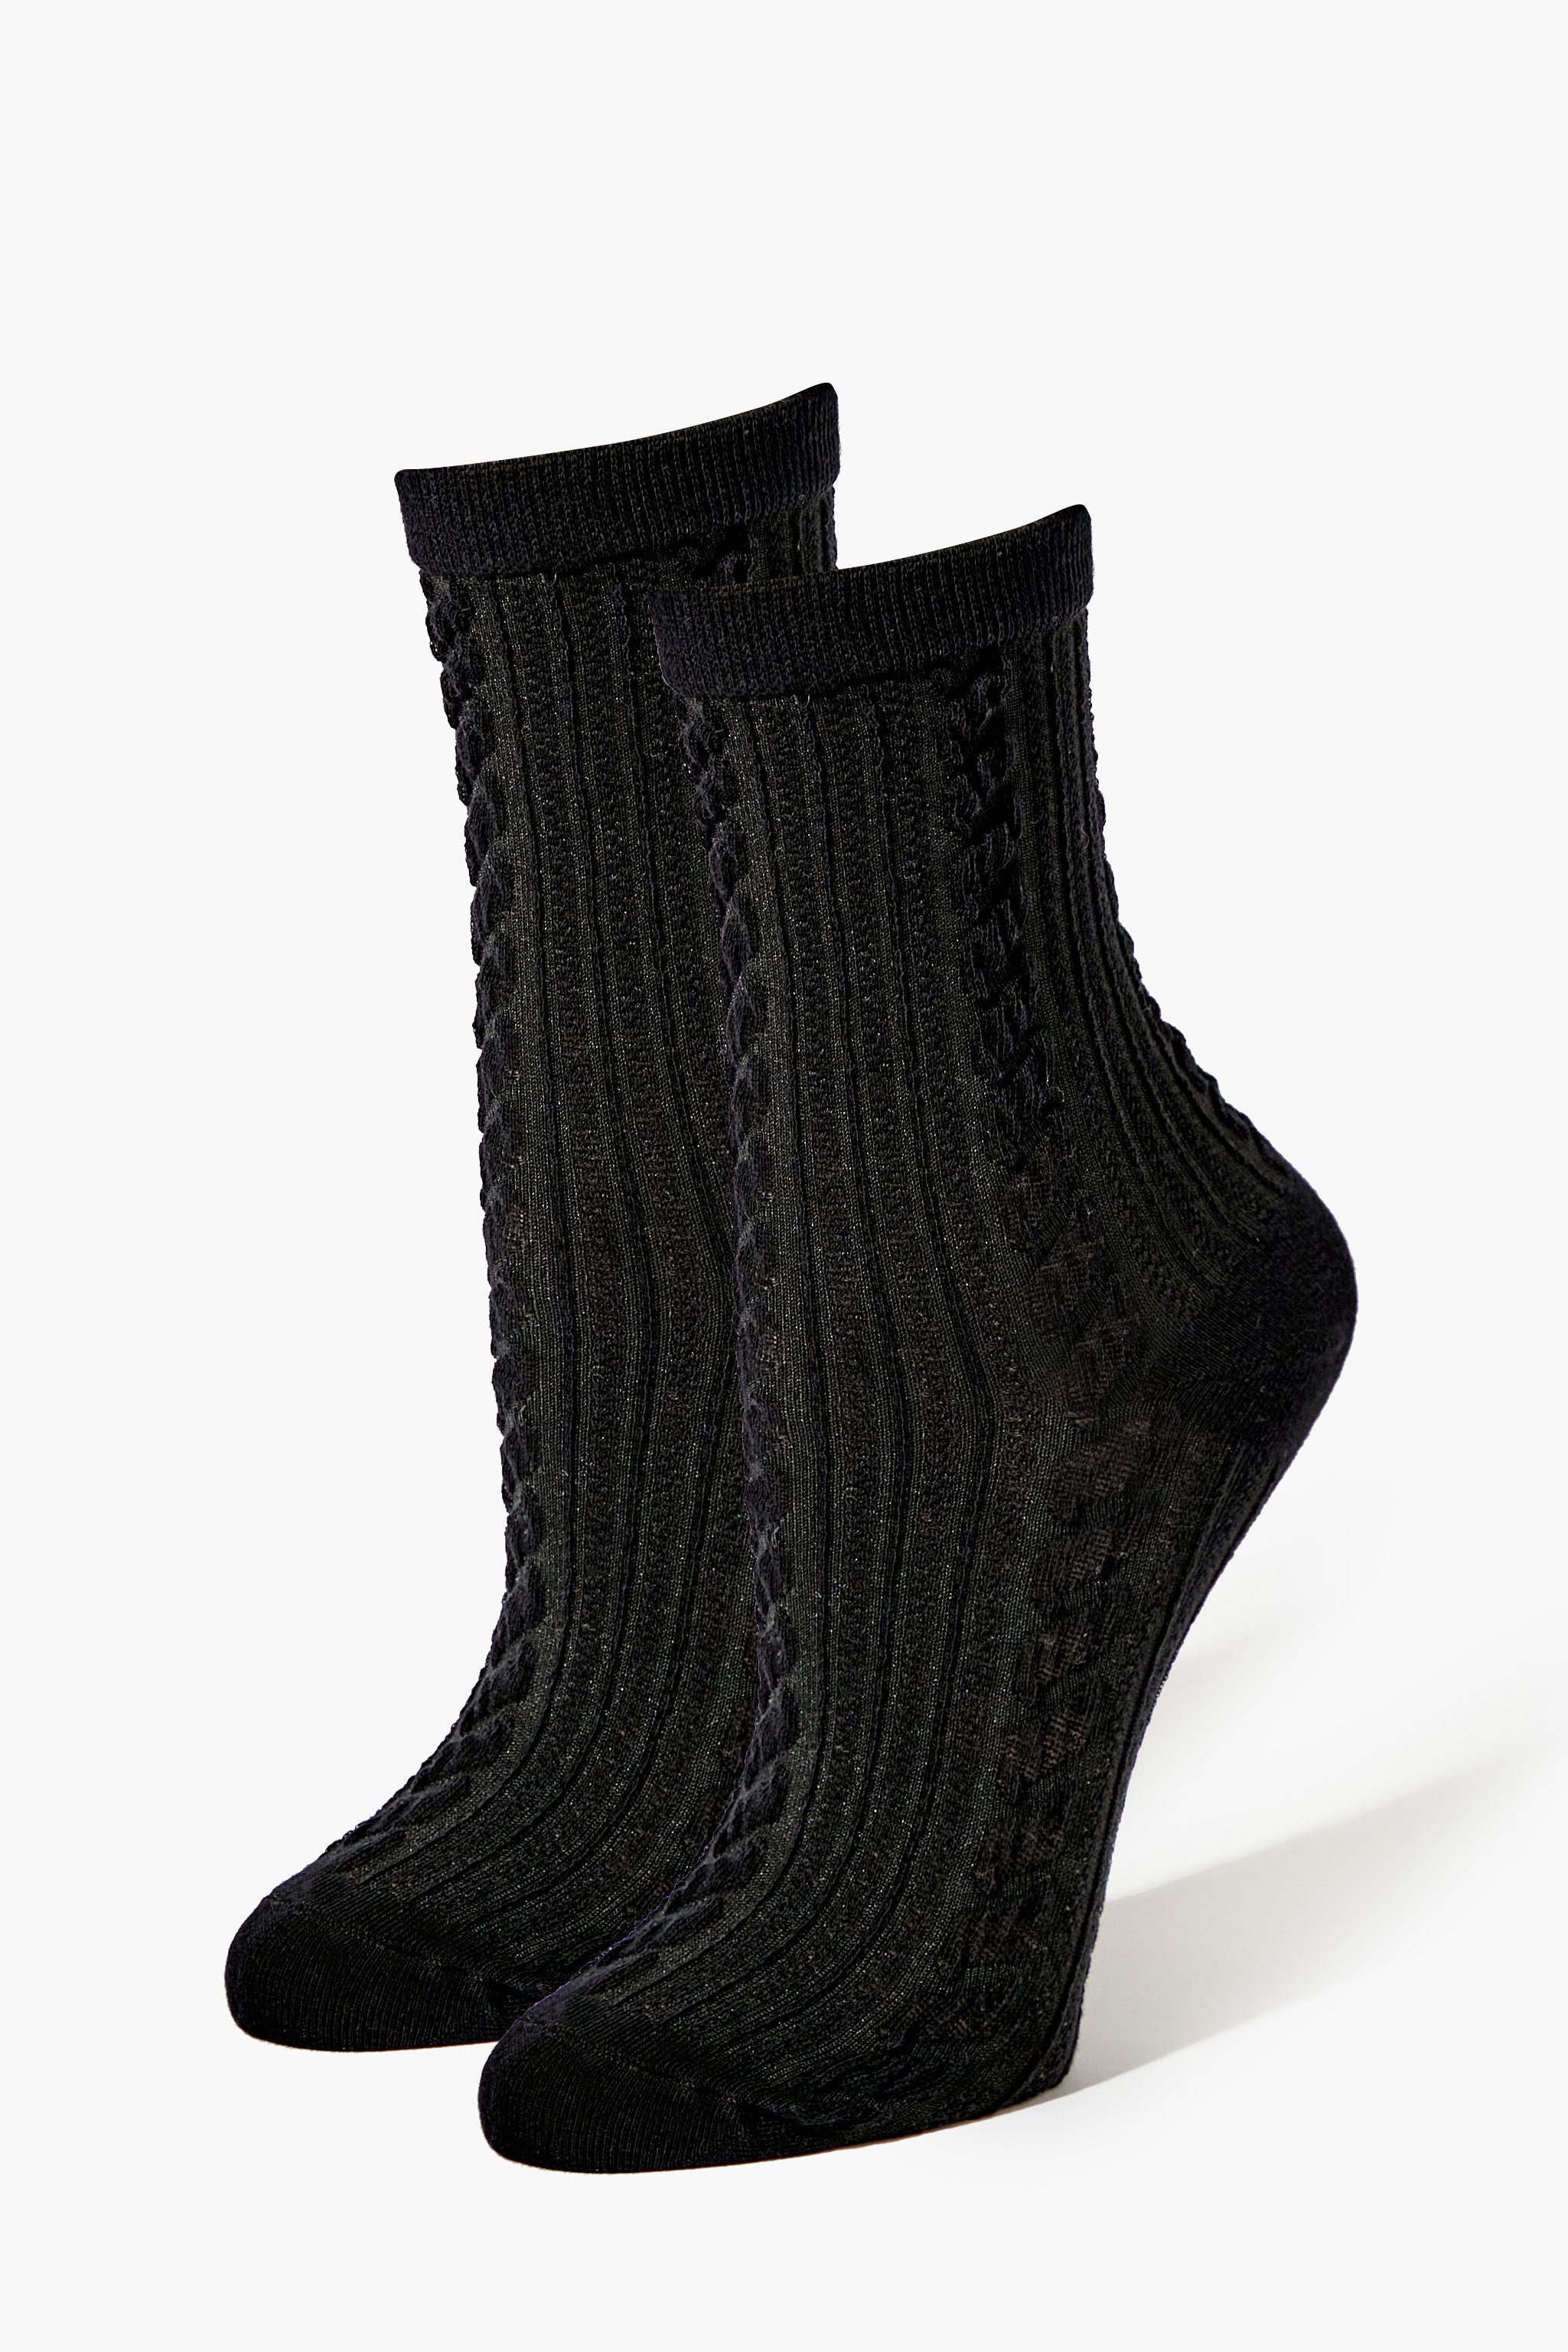 Black Cable Knit Crew Socks